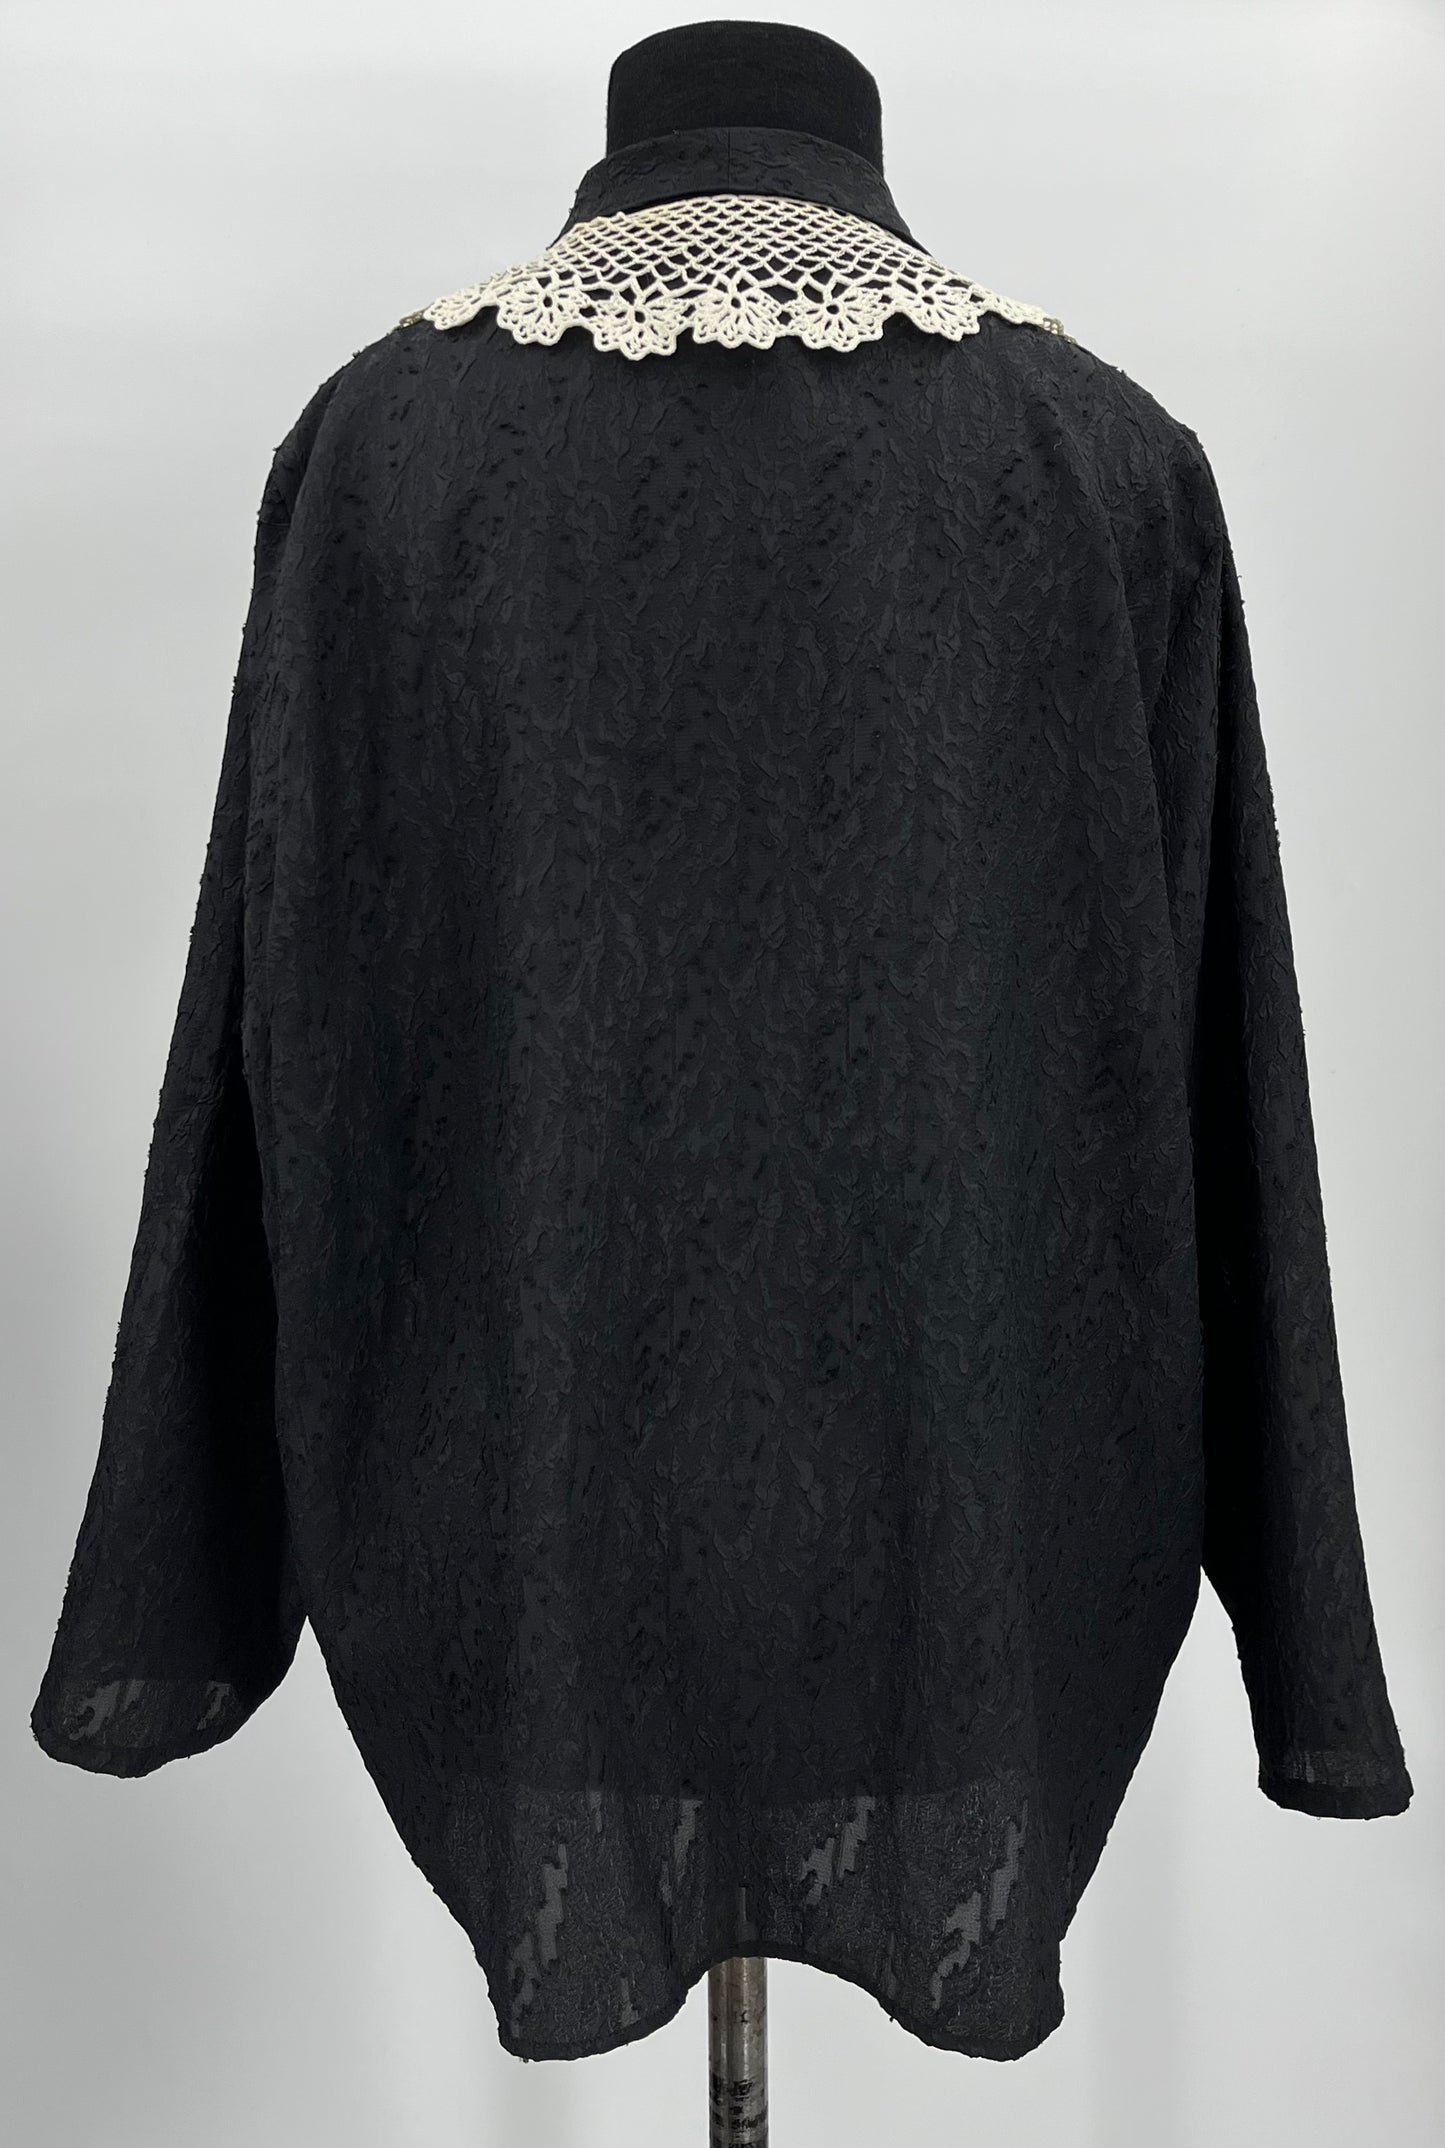 Hena Oy, musta paitapusero pitsikauluksella, 80-luku, koko 42-44